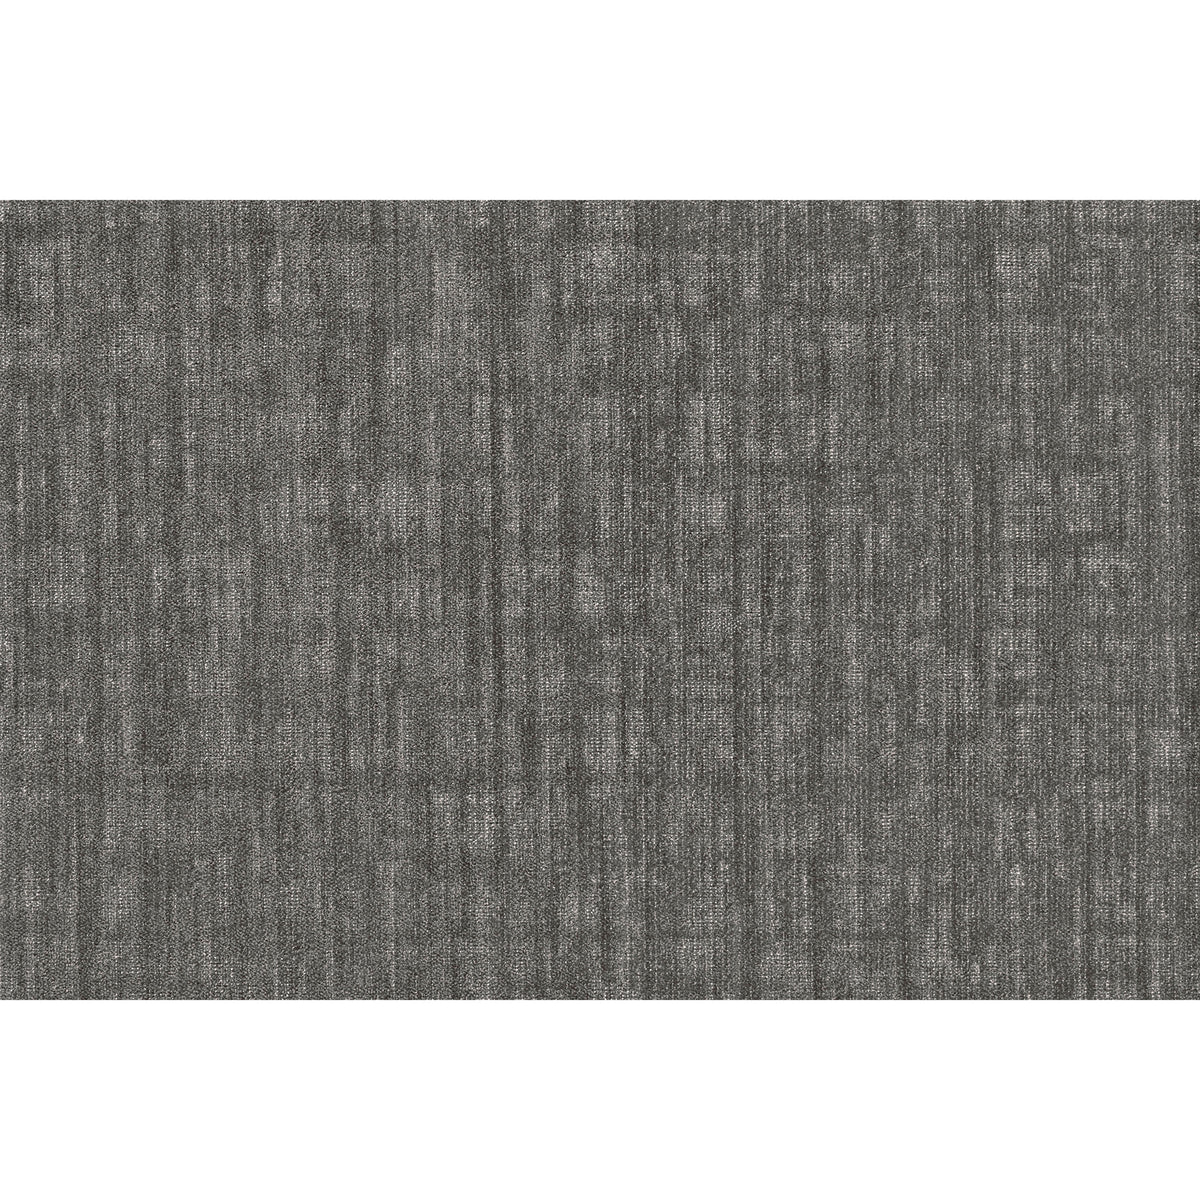 Shaw Contract - Modern Edit - Edition - Carpet Tile - Antique